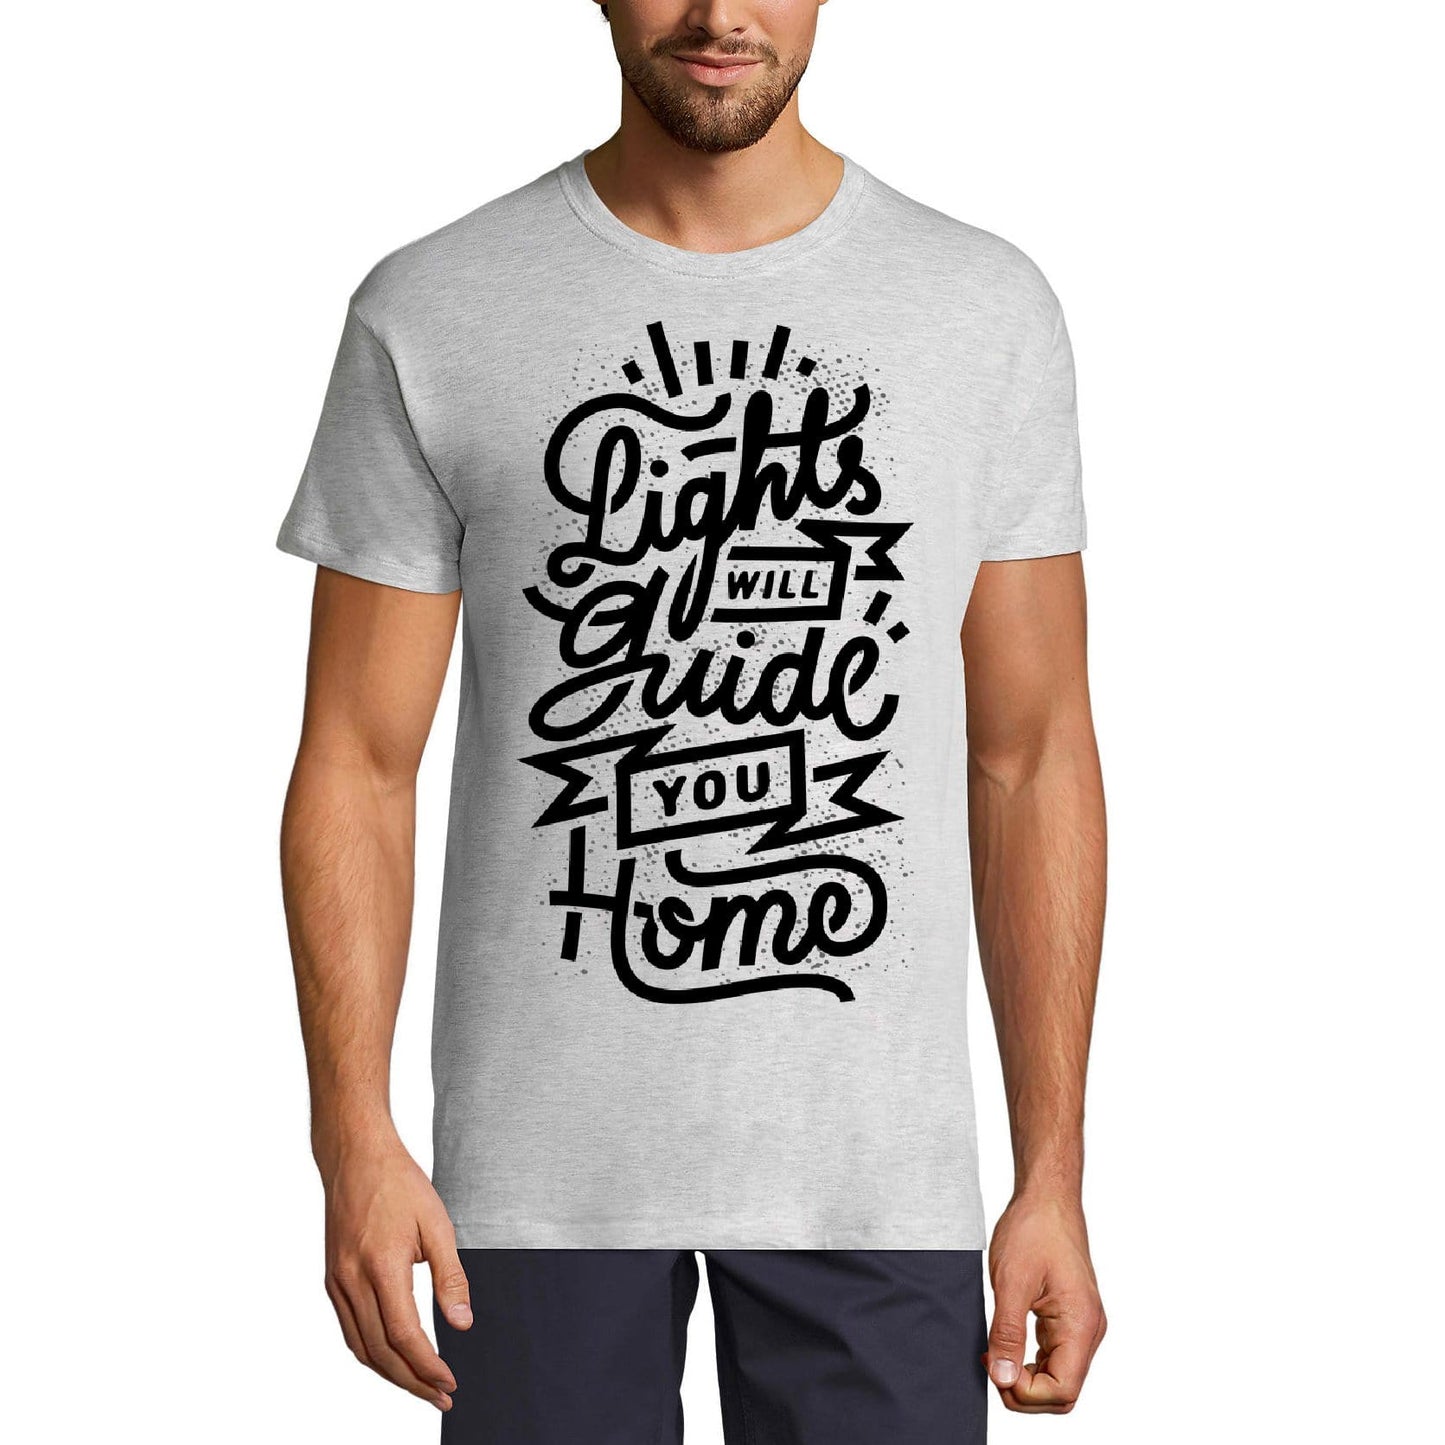 ULTRABASIC Men's T-Shirt Lights will guide you home - Short Sleeve Tee shirt